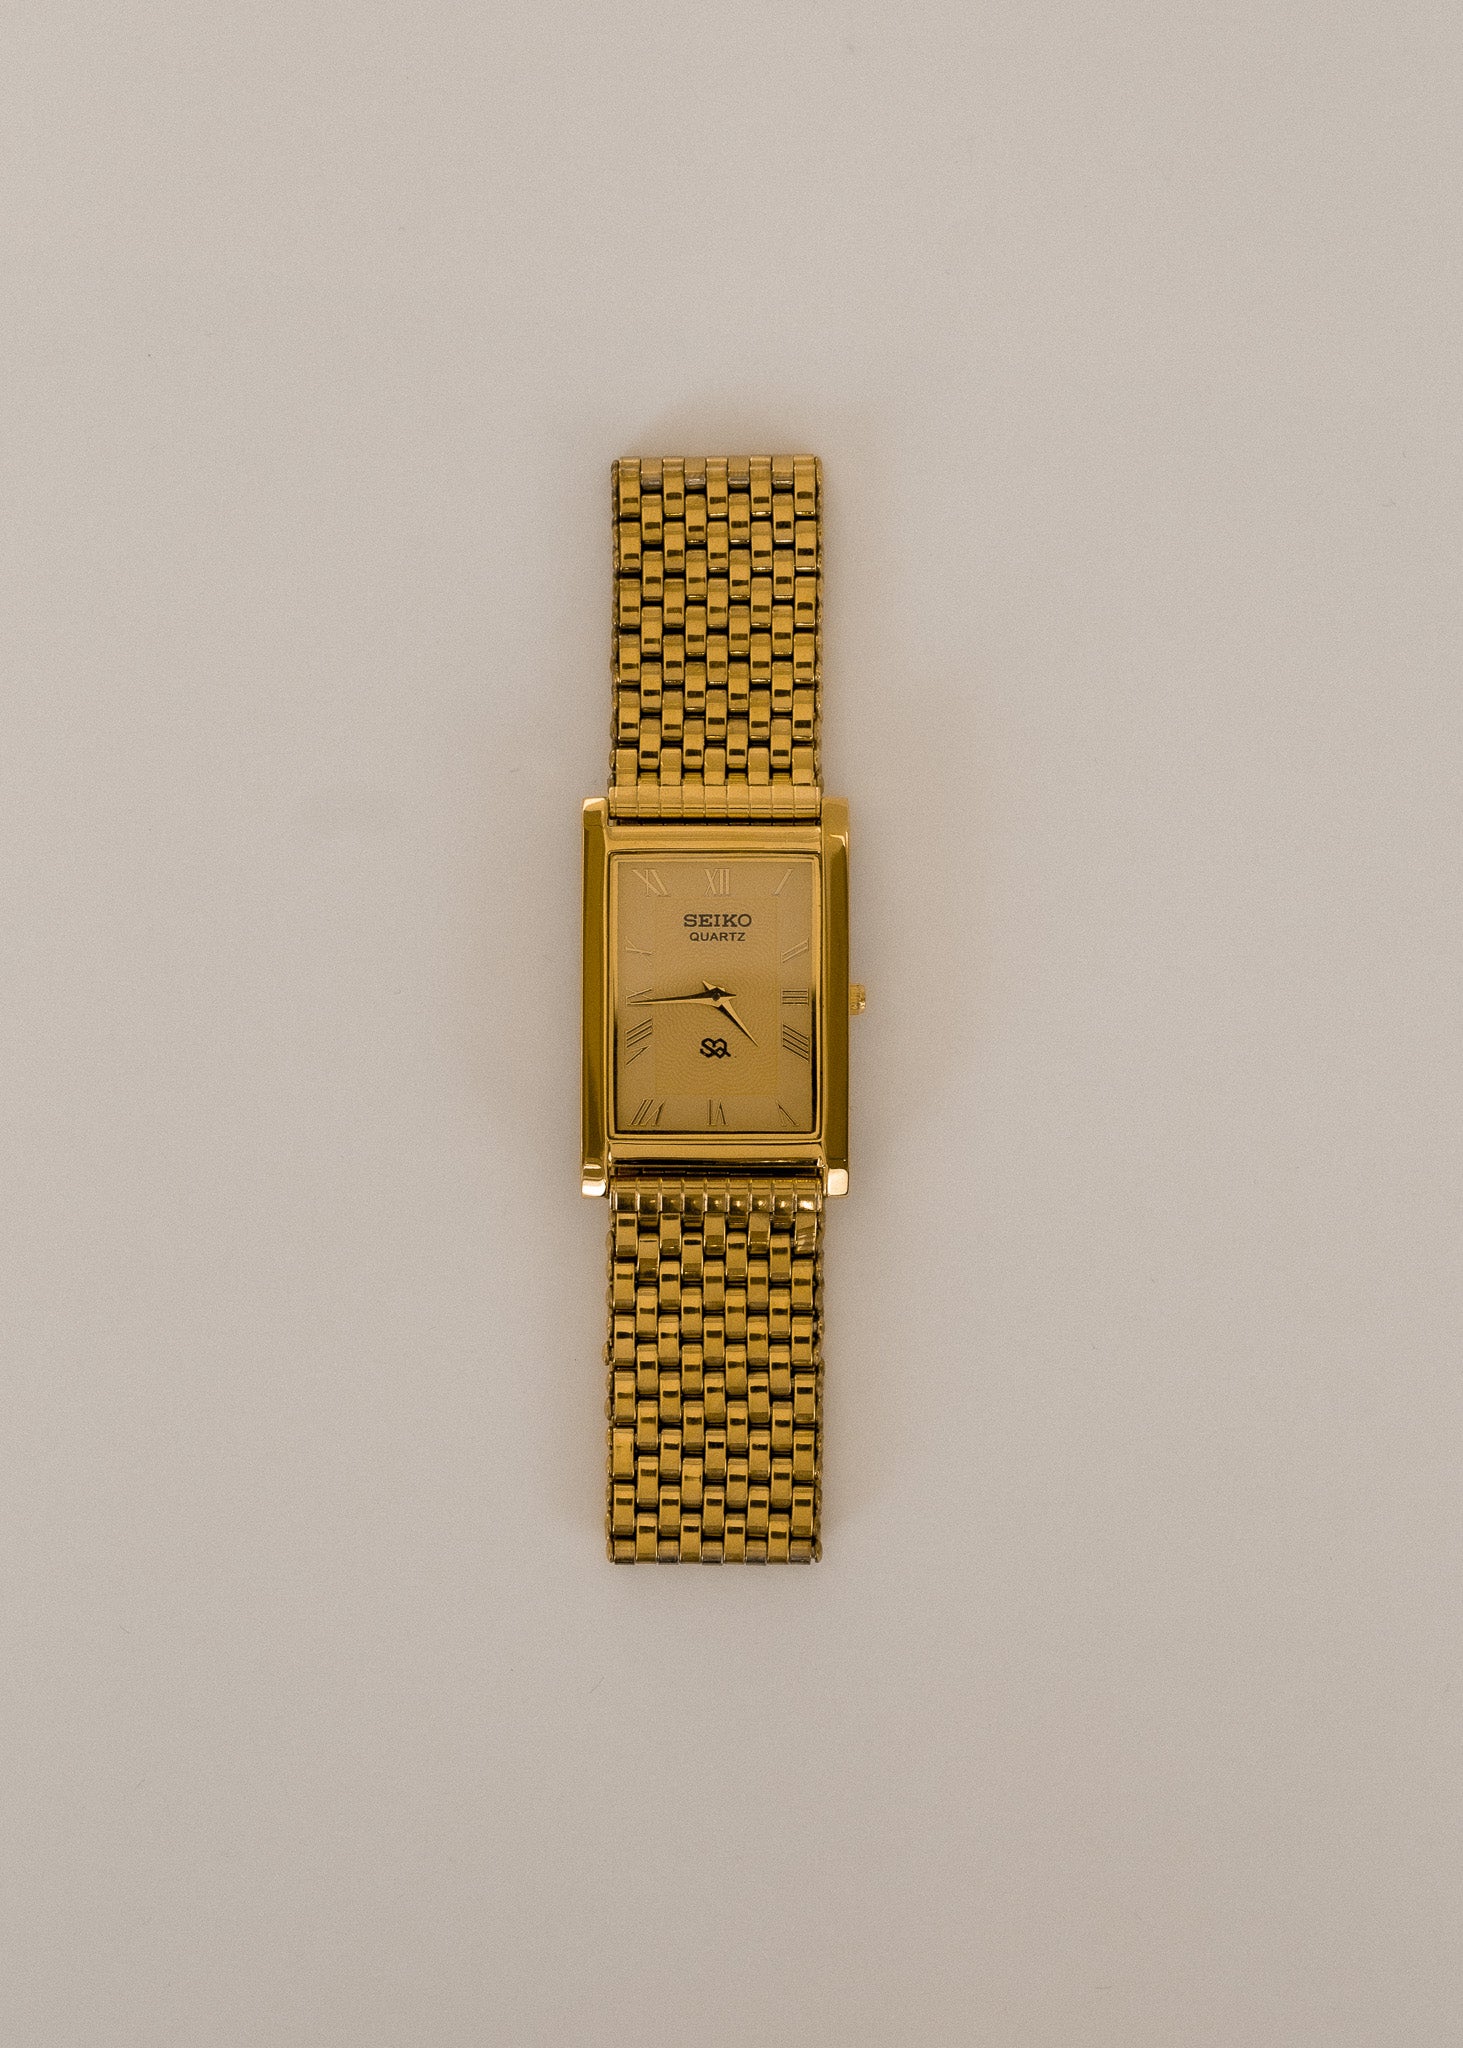 Vintage Seiko Watch Gold Face